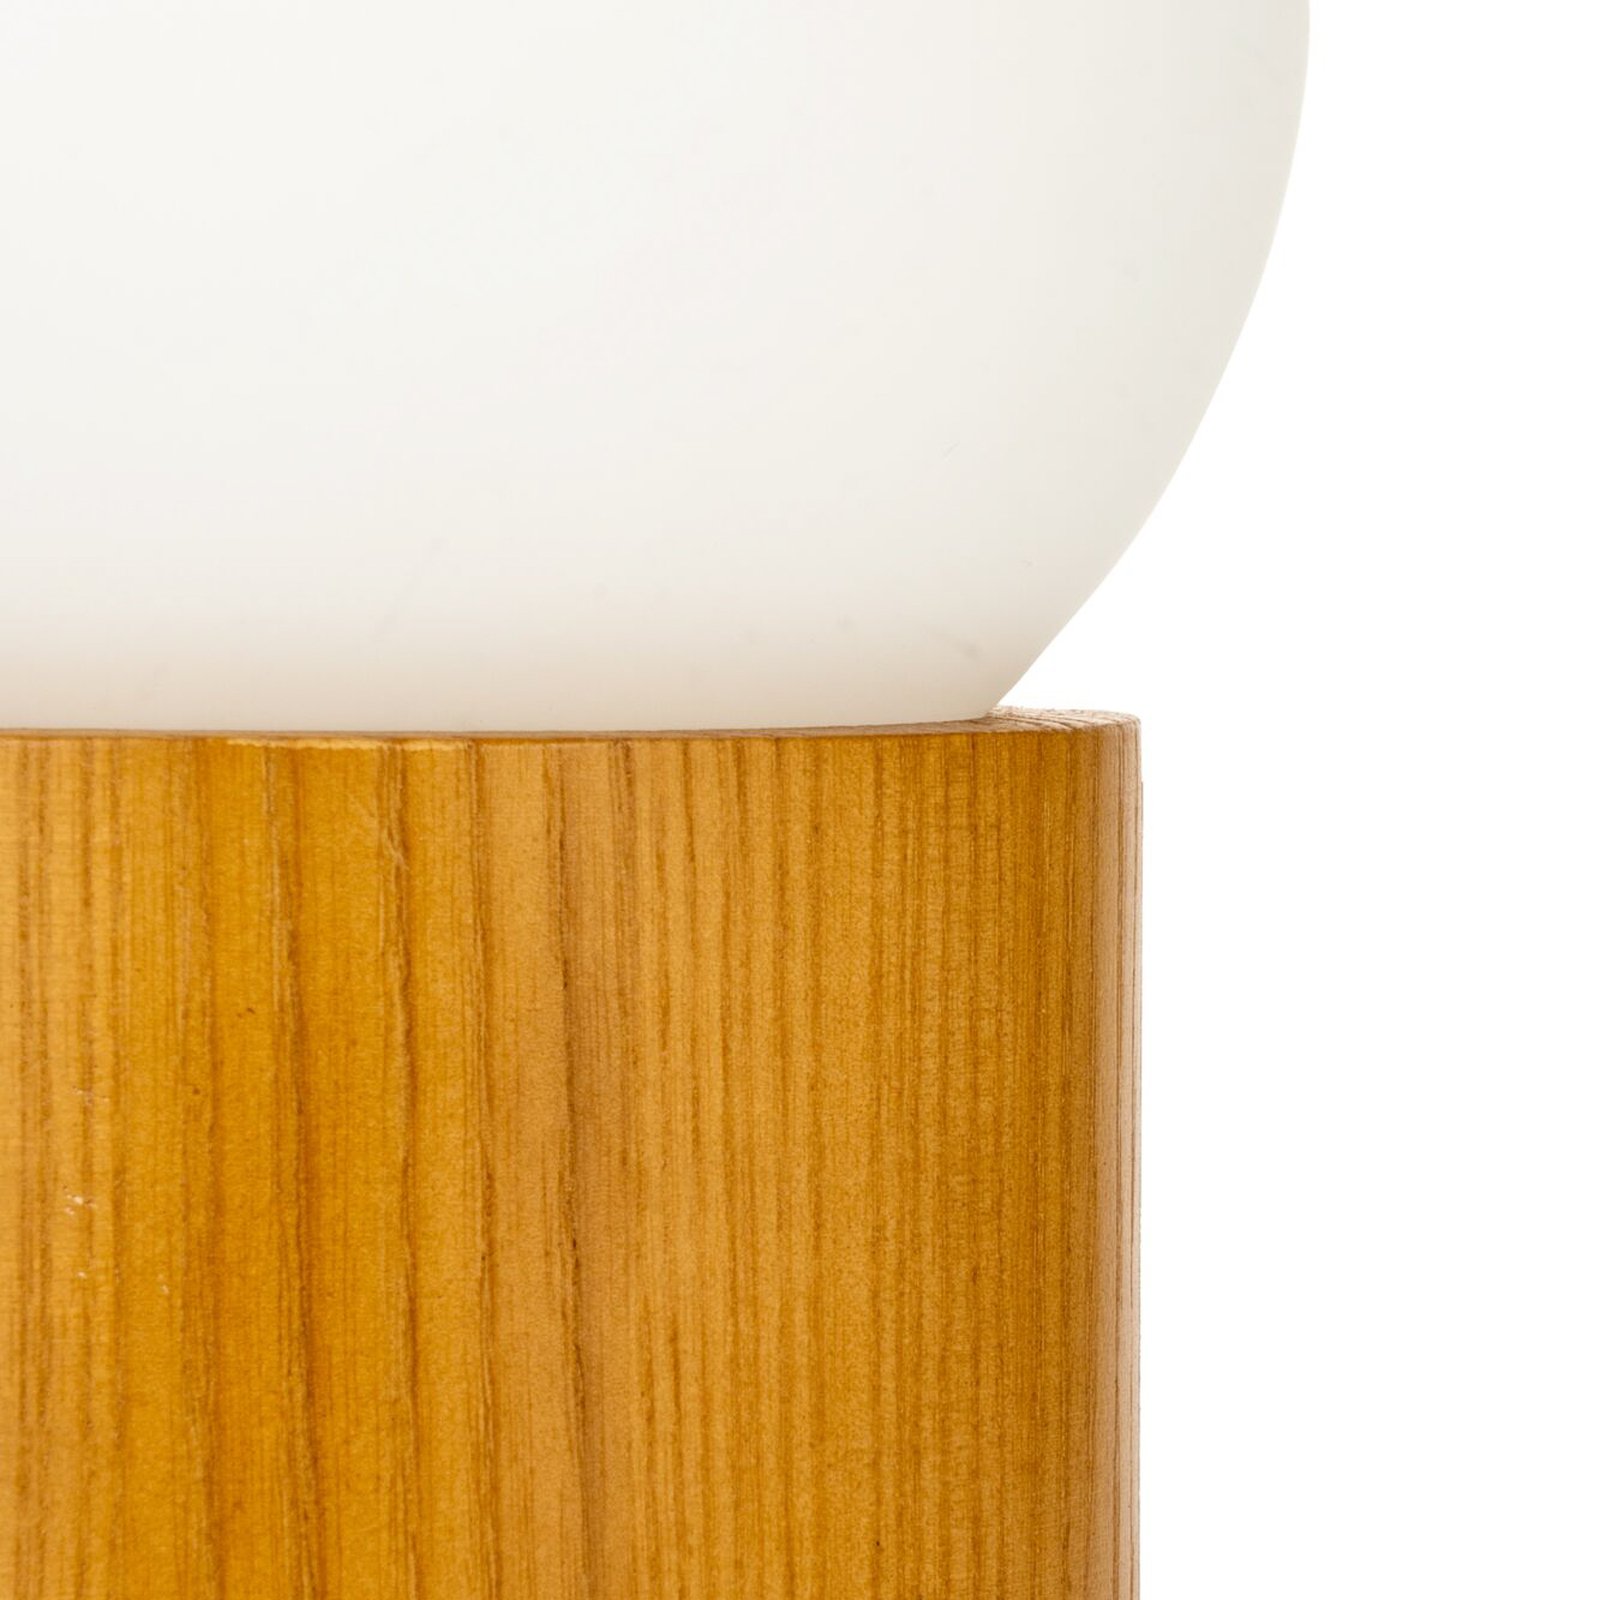 Pauleen Woody Shine table lamp, wooden, glass